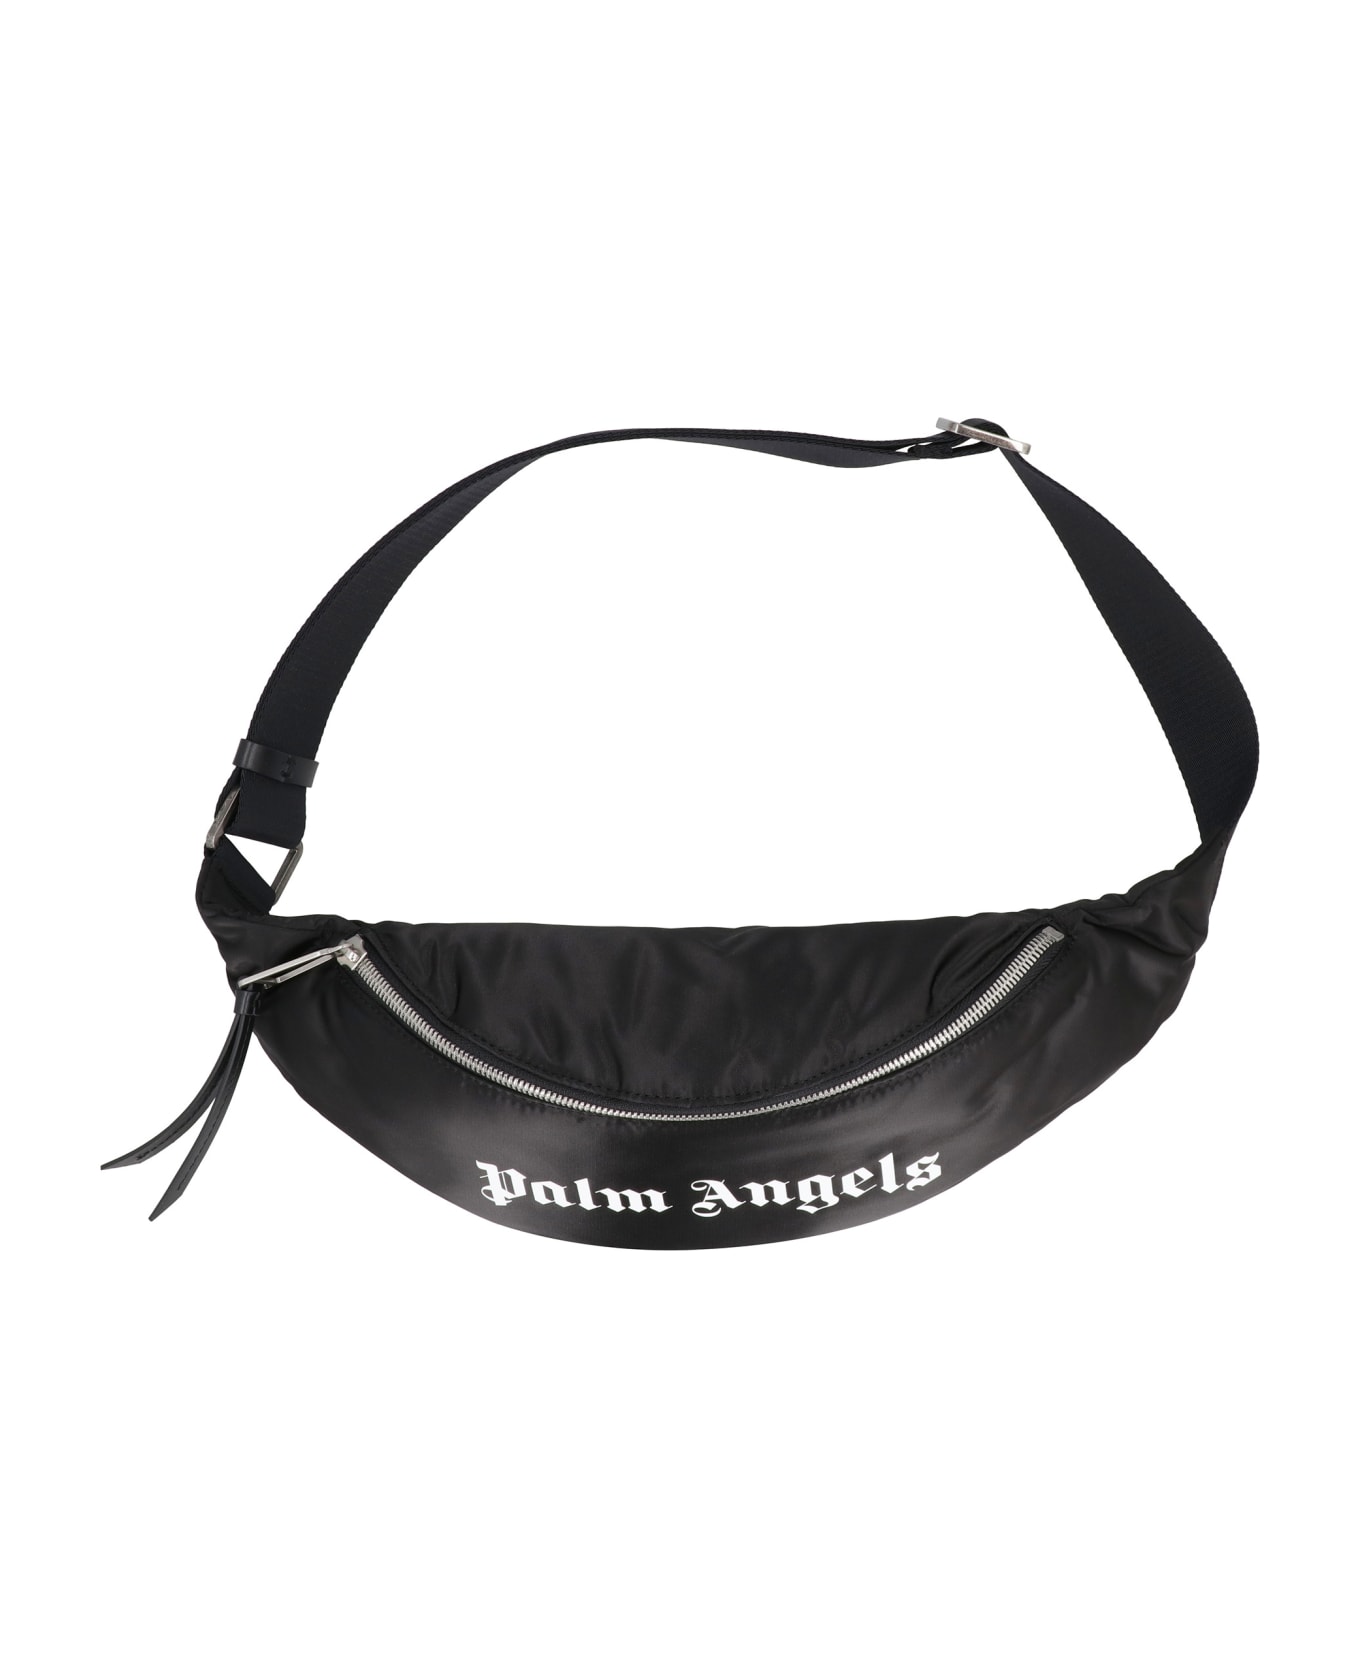 Palm Angels Nylon Belt Bag - Black